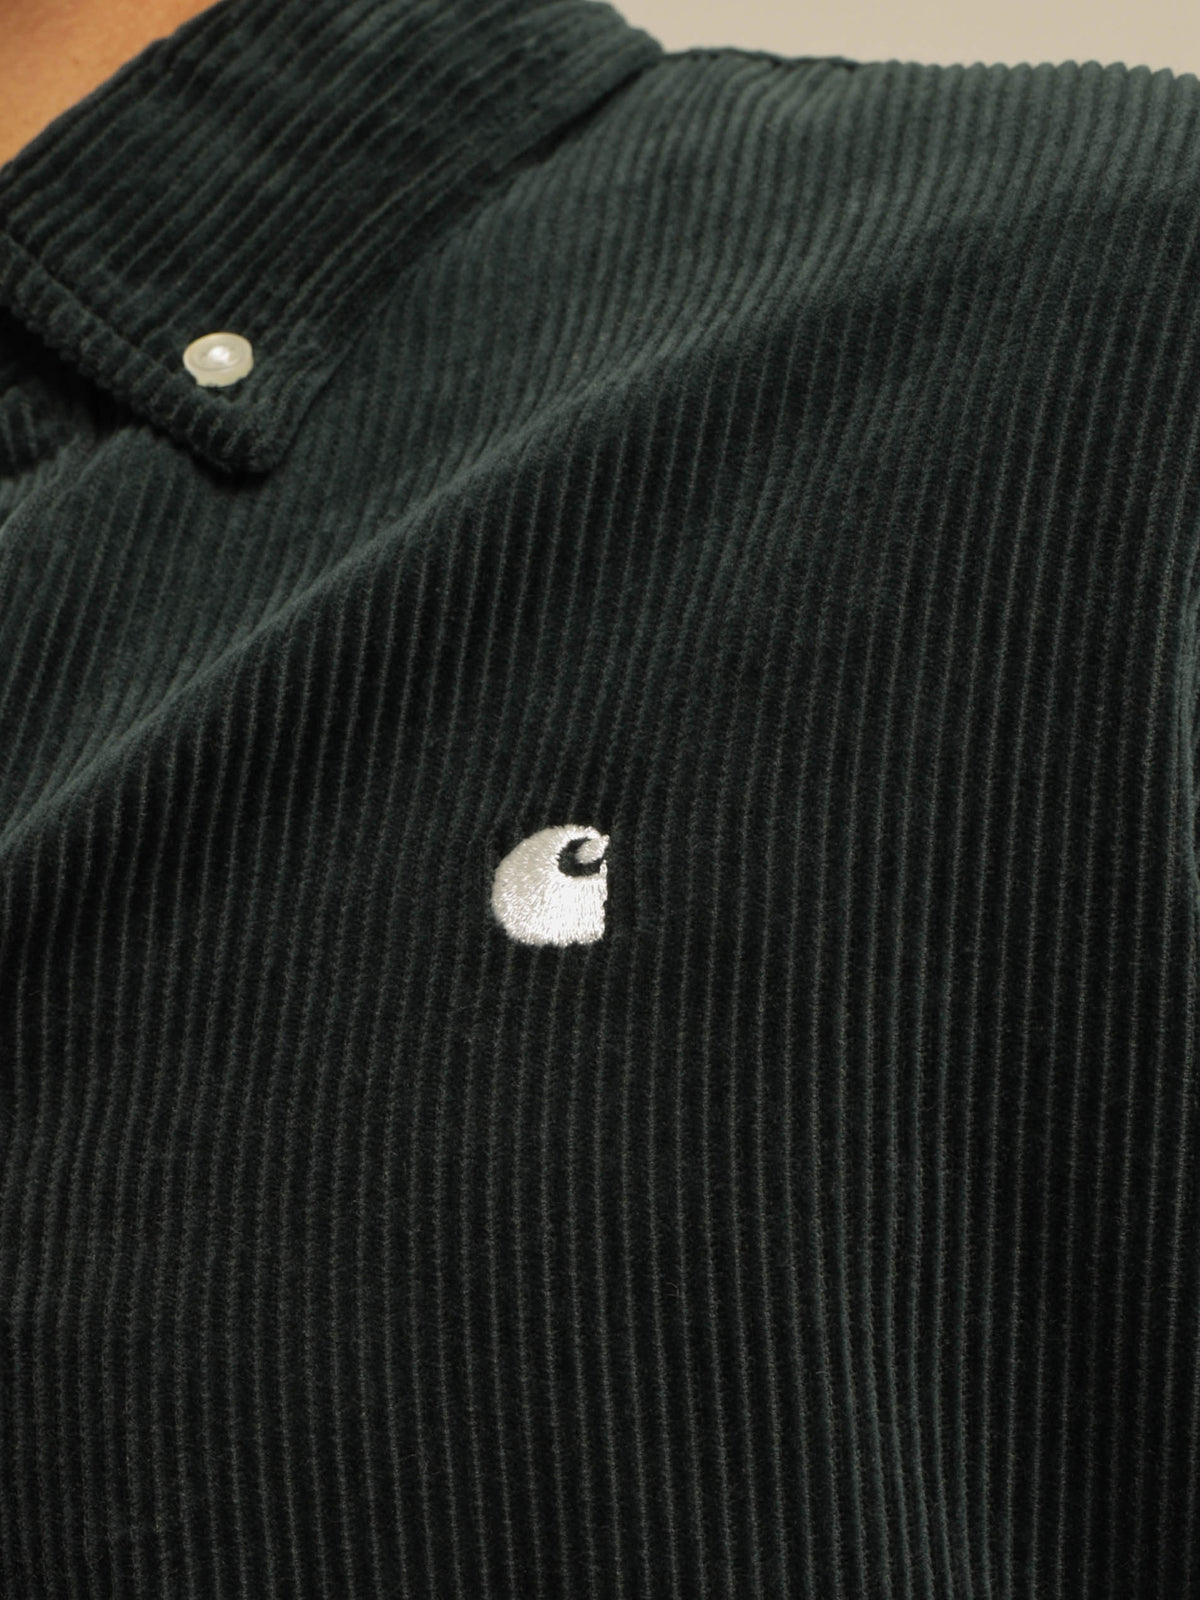 Long Sleeve Madison Cord Shirt in Frasier Wax